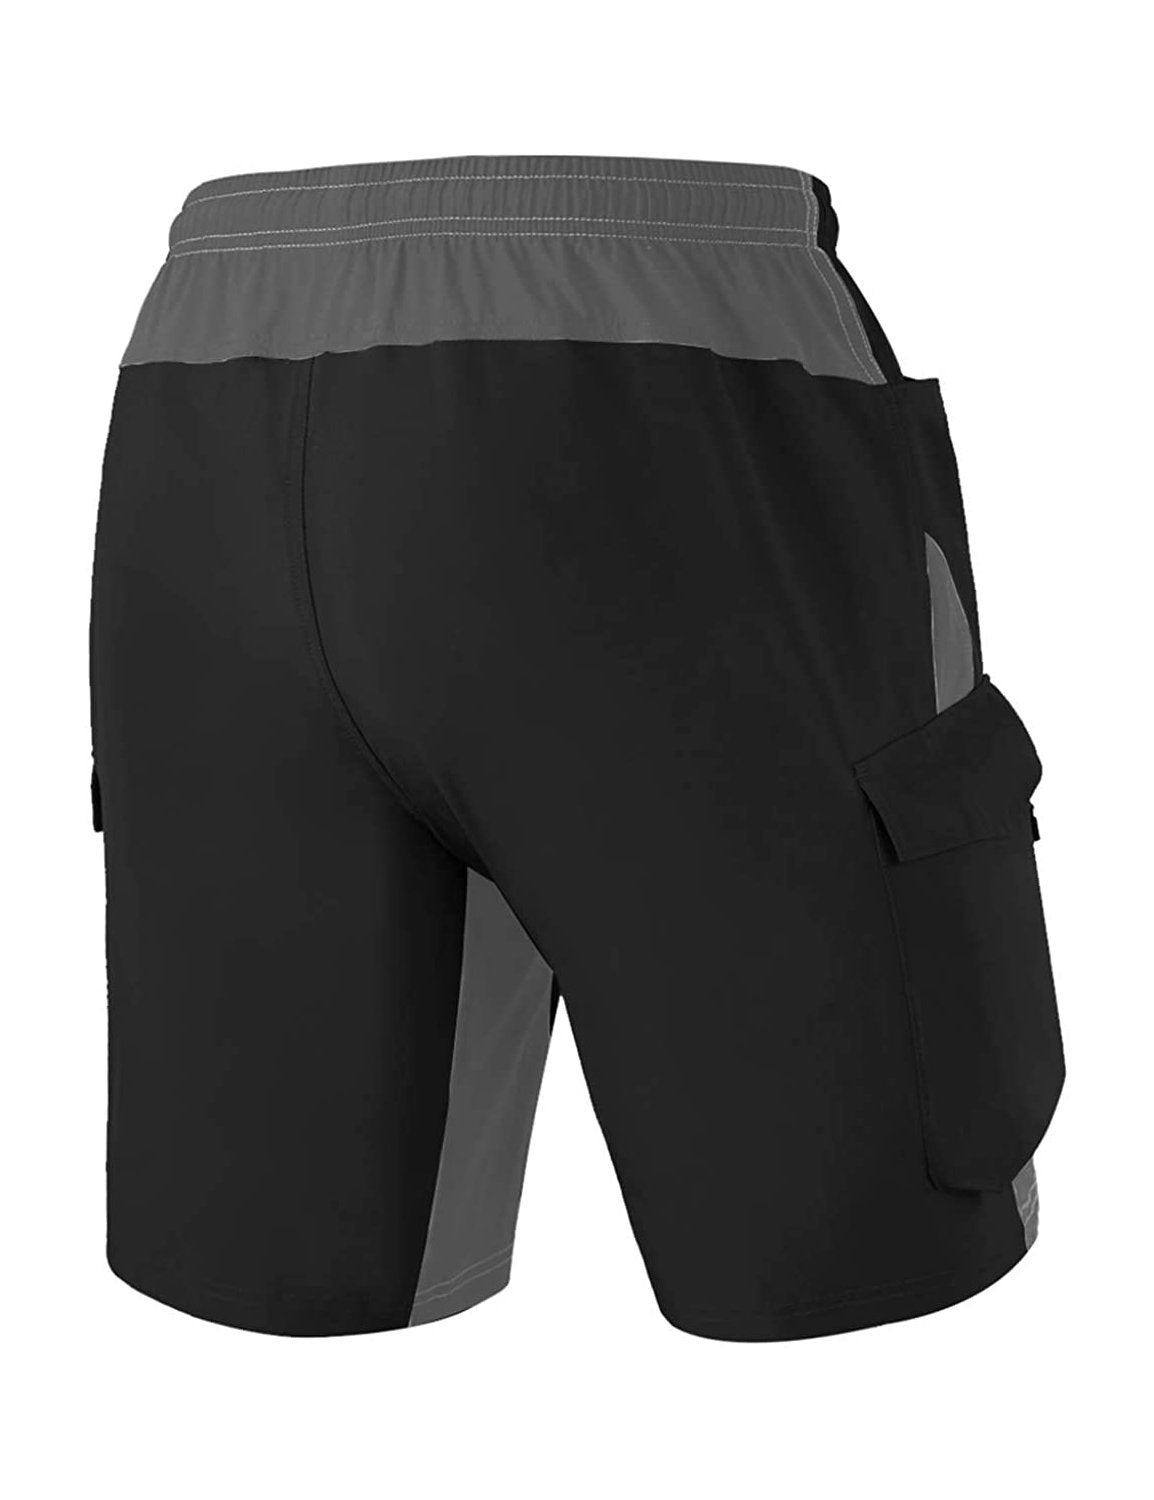  Mens Padded Bike Shorts Cycling Tights 3D Padding Bicycle  Accessories Road Biking MTB Pockets UPF 50+ Black/Grey Size M